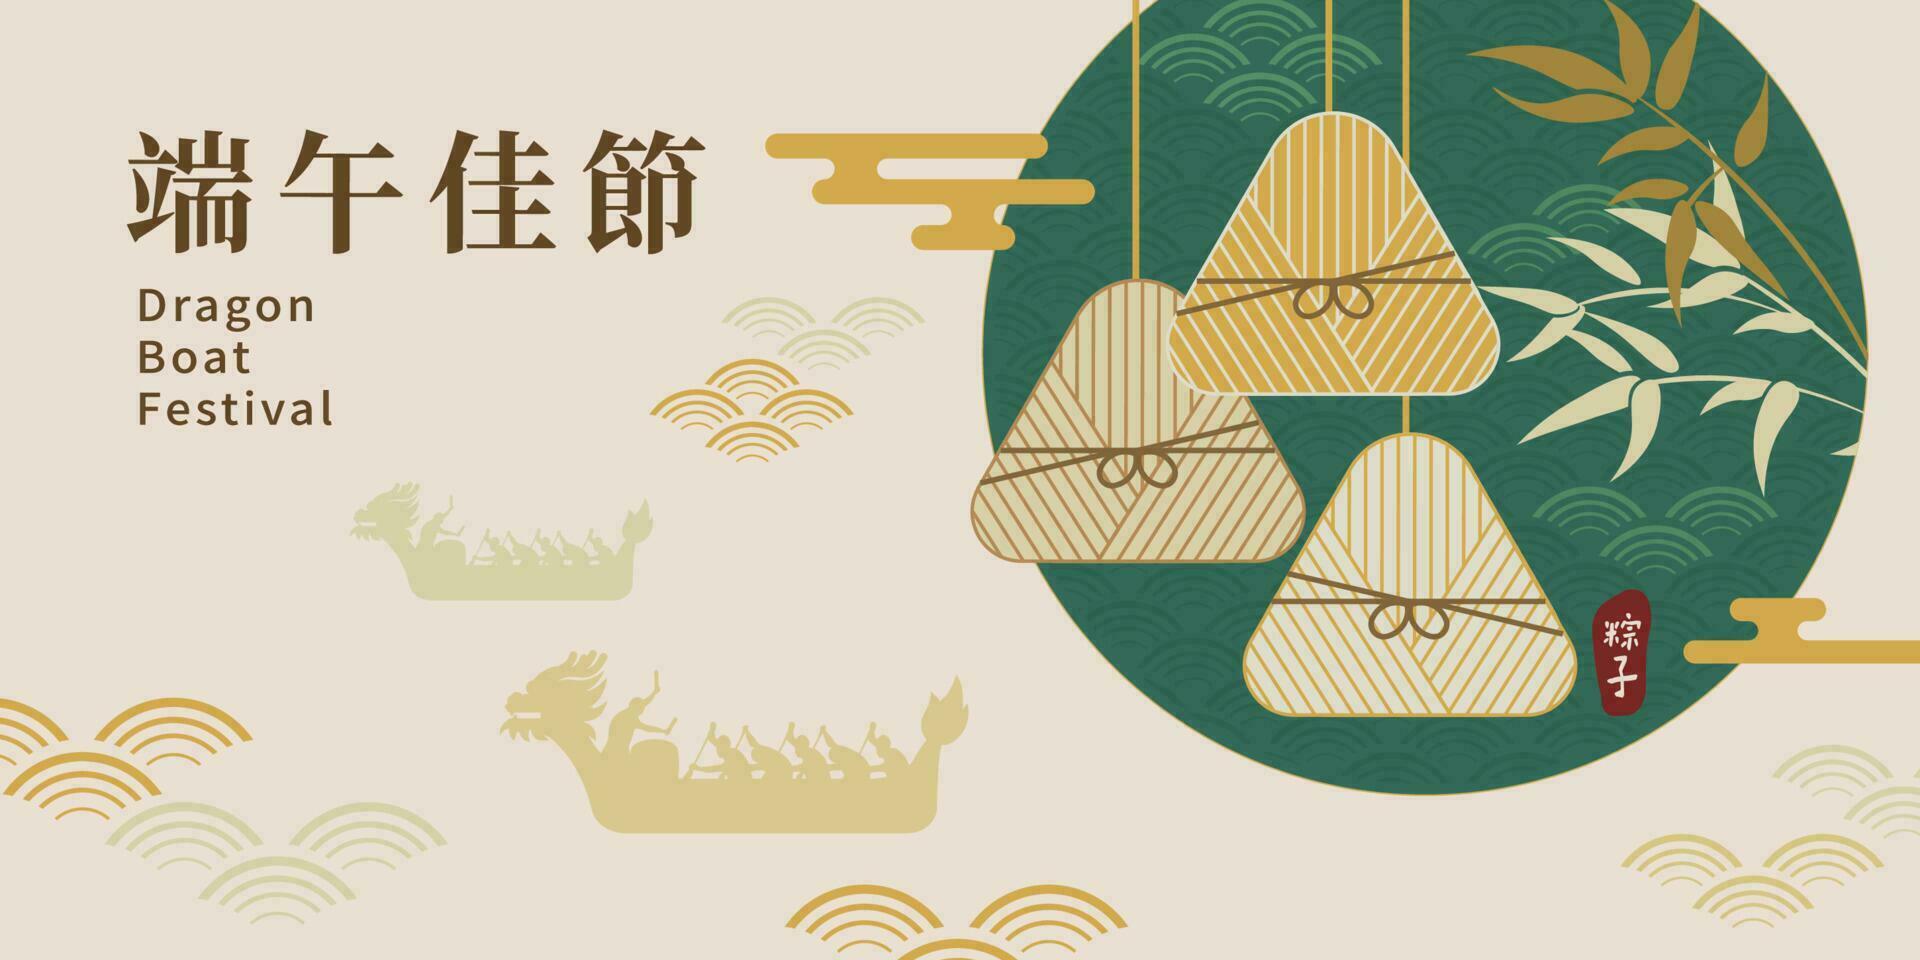 Dragon Boat Festival banner design with dragon boat and rice dumplings vector illustration.